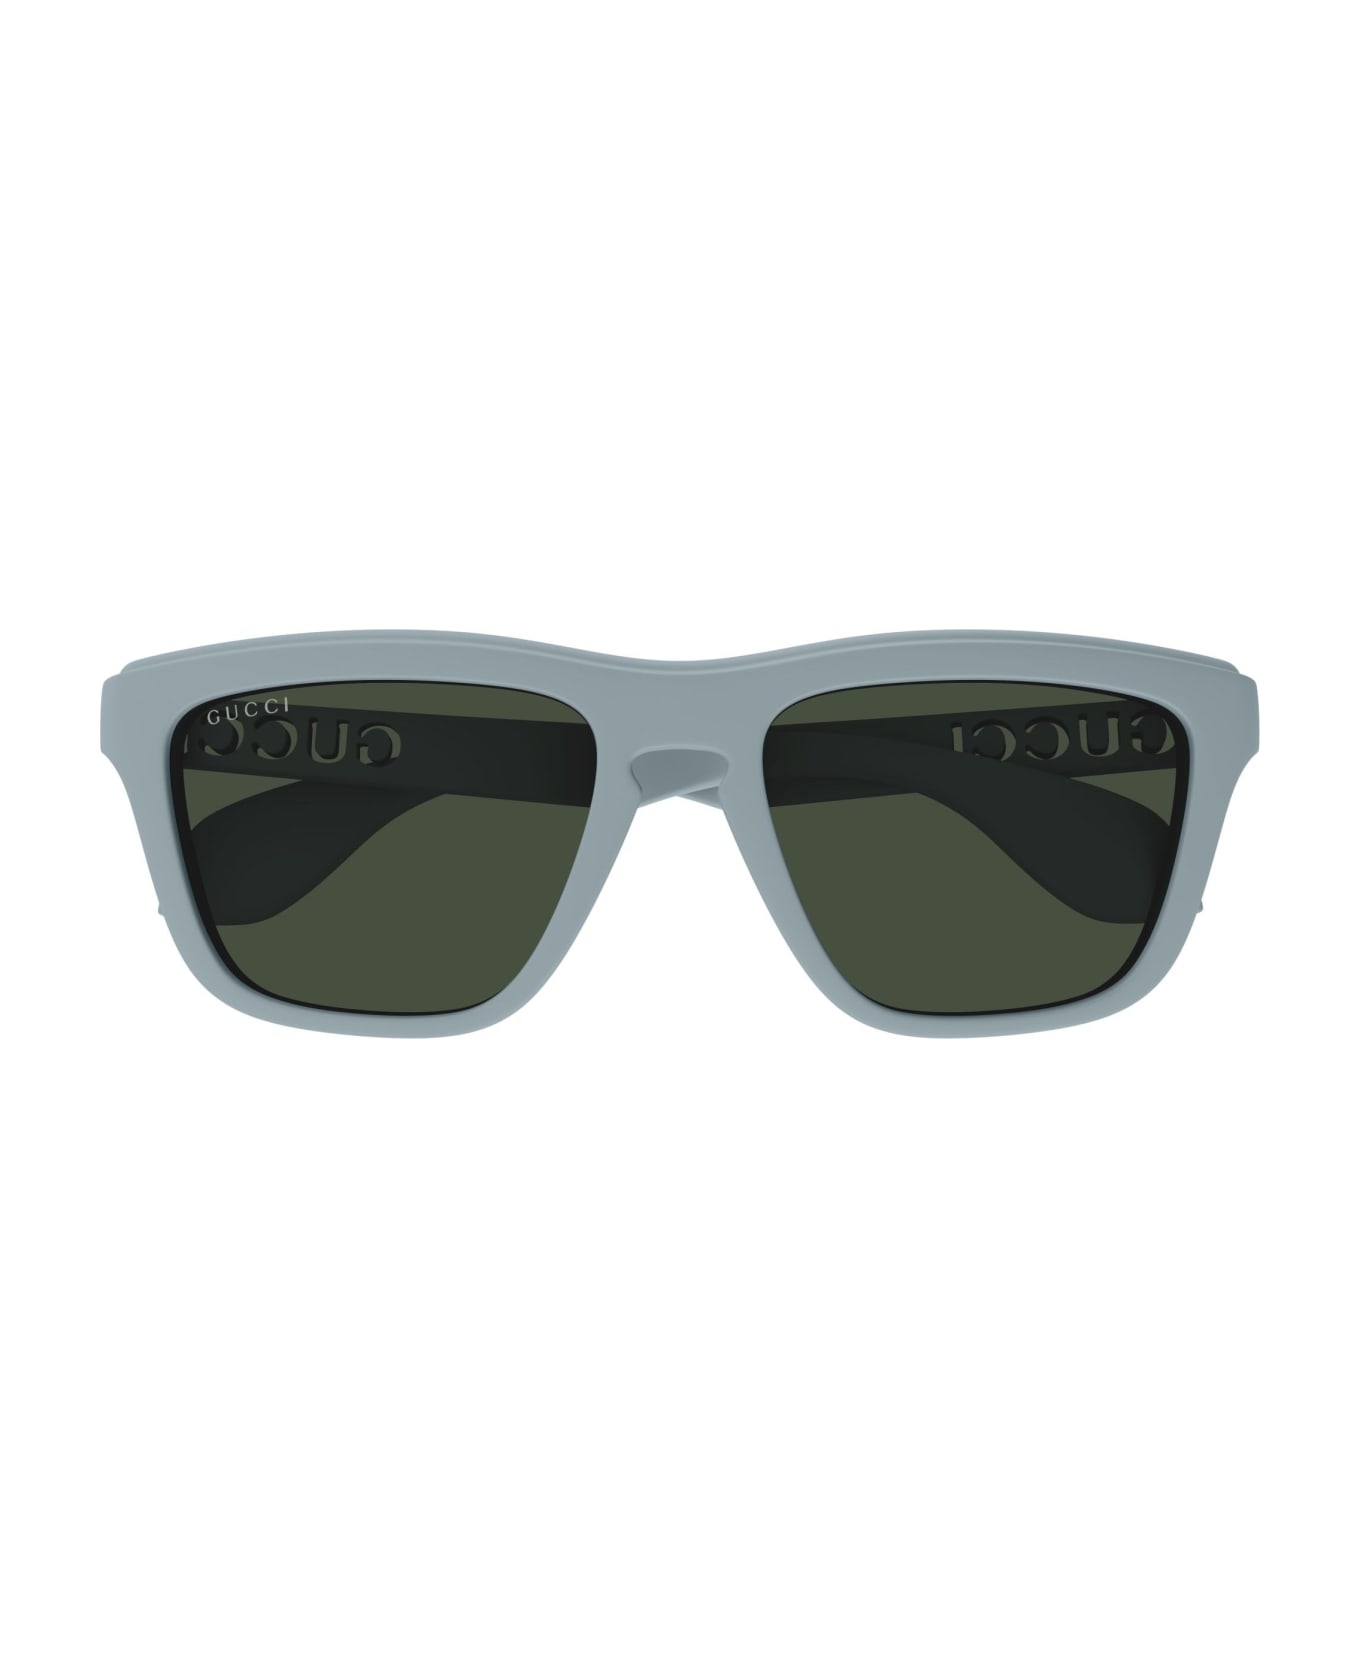 Gucci Eyewear Sunglasses - Azzurro/Blu chiaro